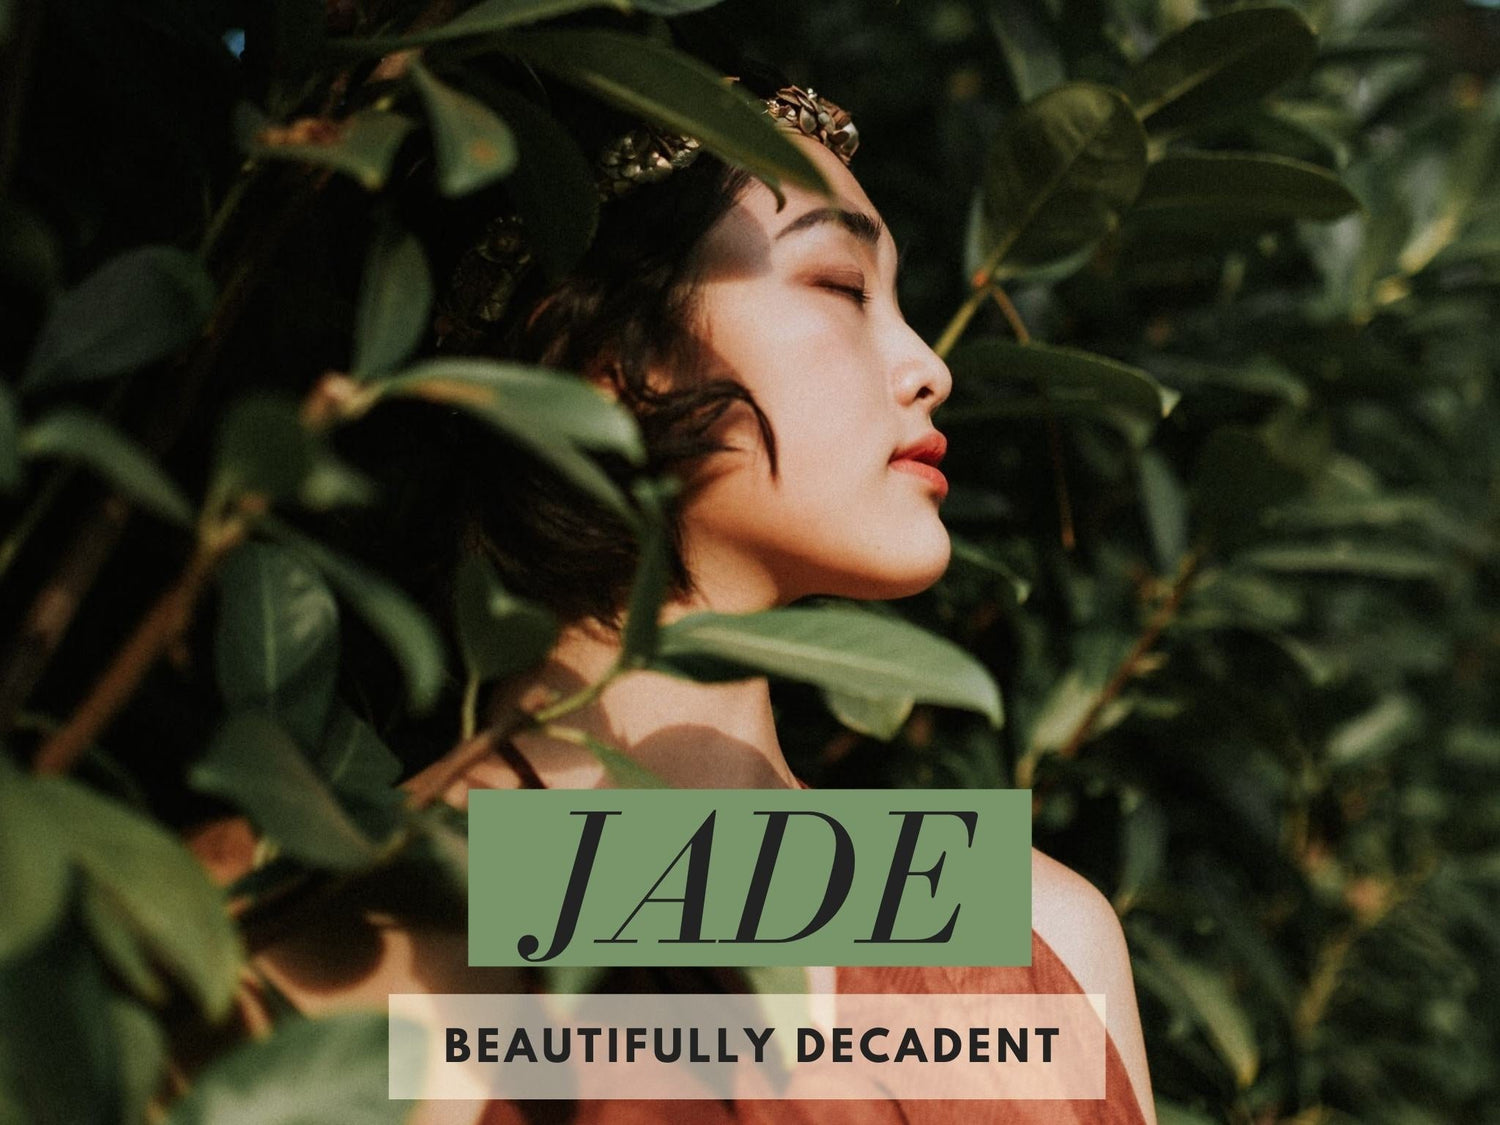 Jade Perfume, Beautifully Decadent - The Sage Lifestyle